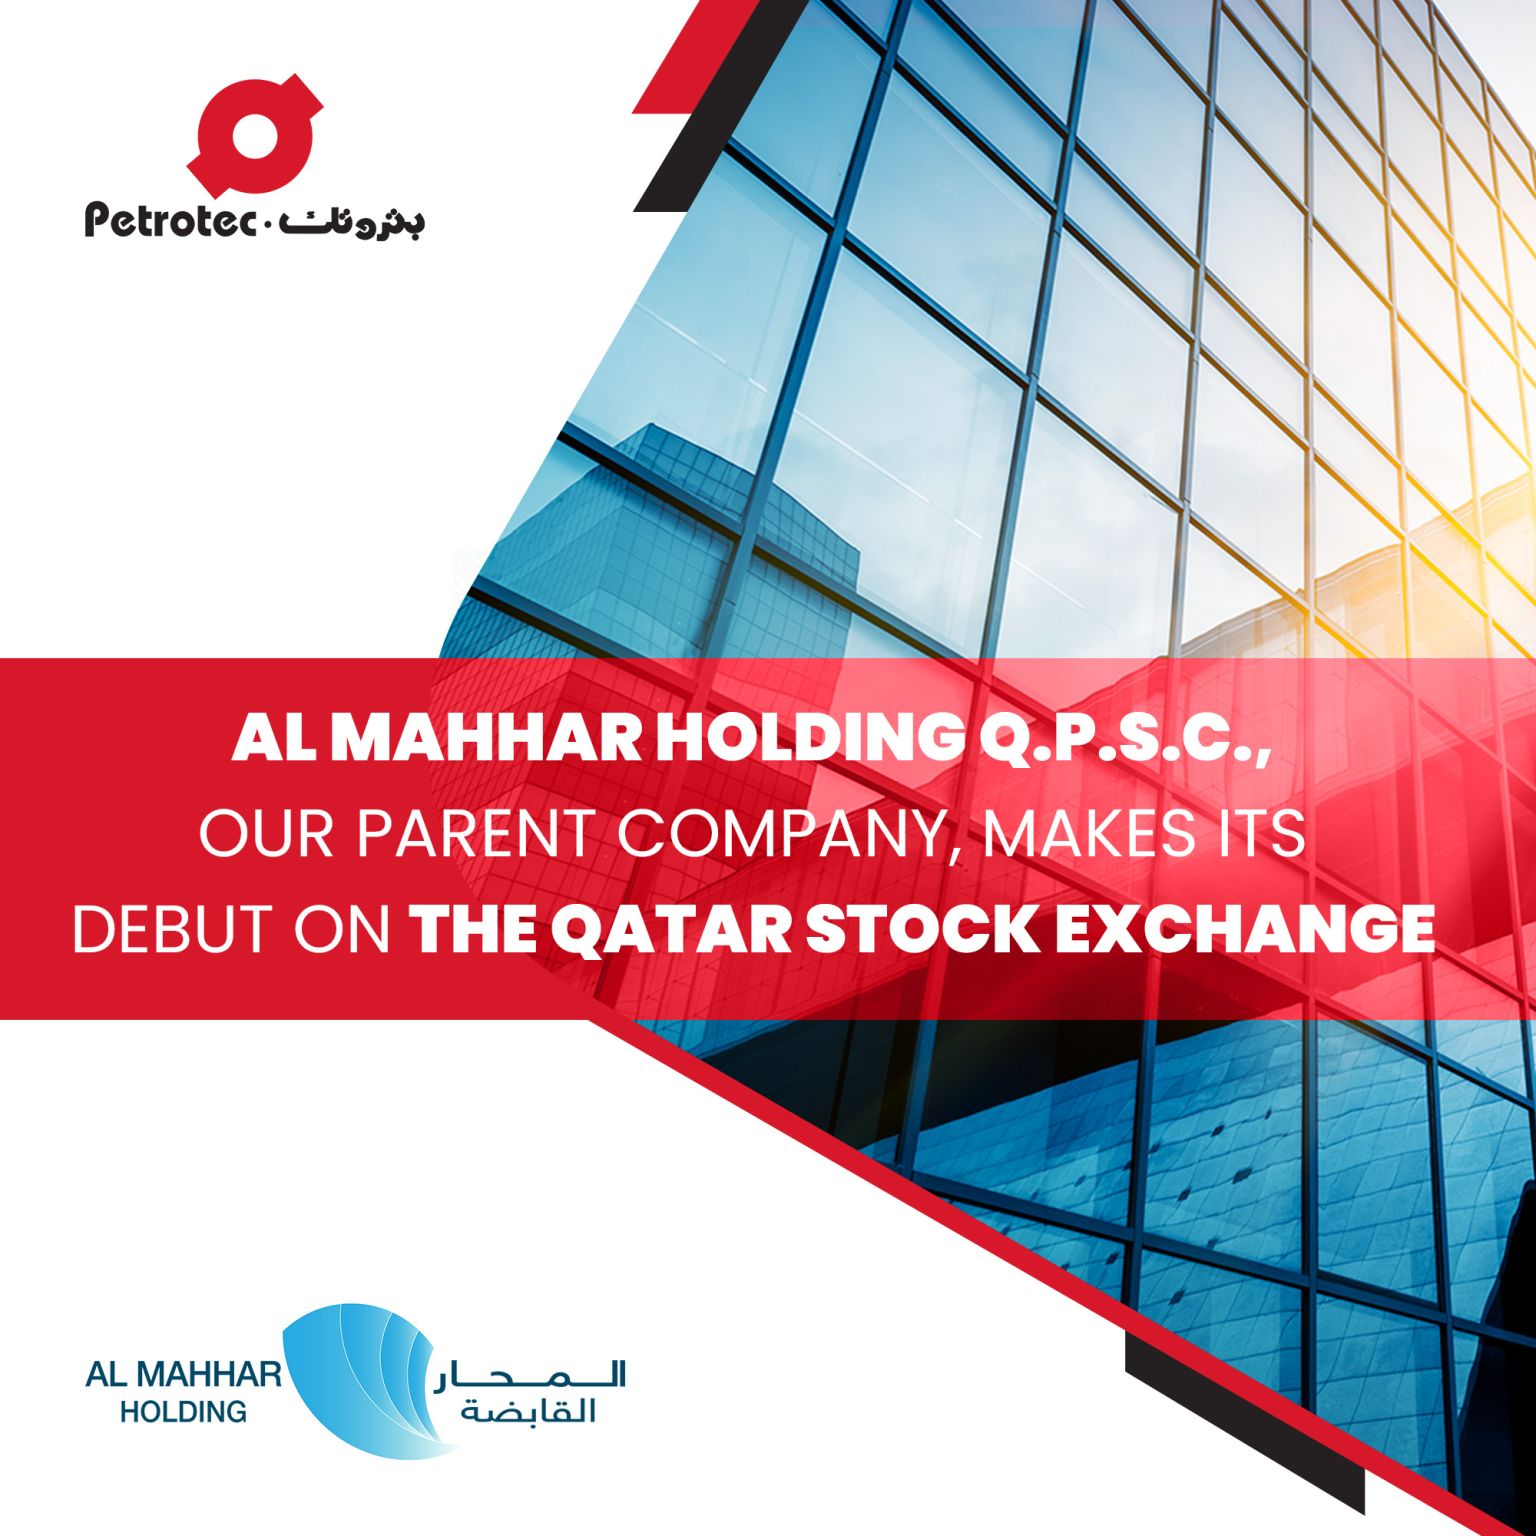 Al Mahhar Holding is now on the Qatar Stock Exchange